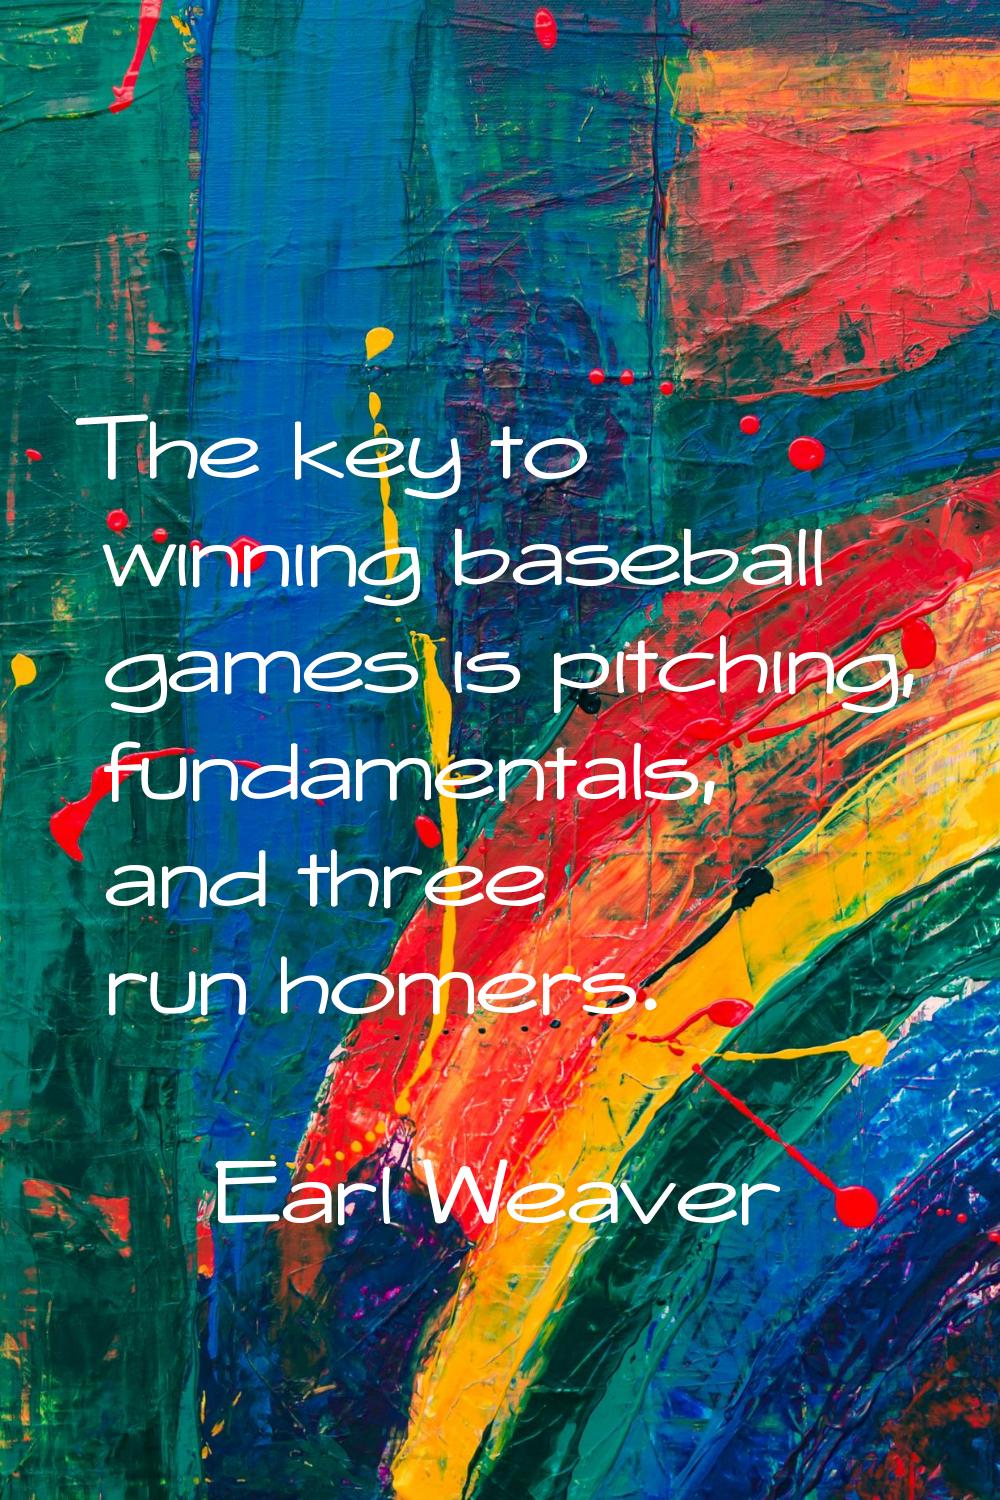 The key to winning baseball games is pitching, fundamentals, and three run homers.